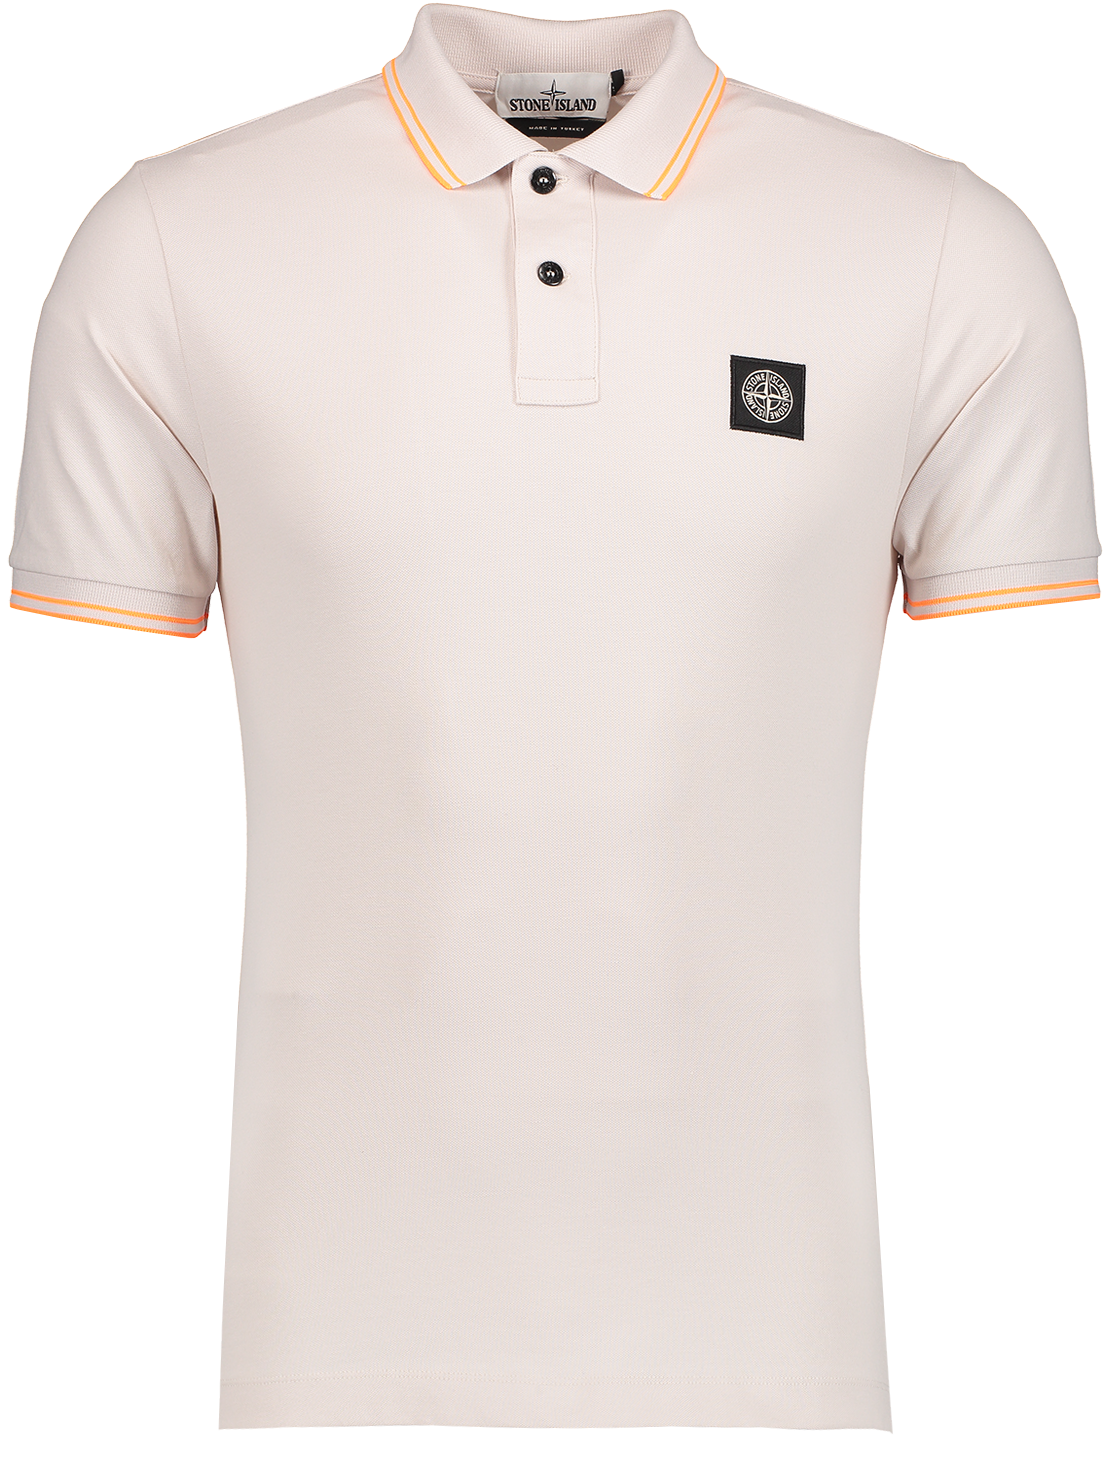 A White Polo Shirt With Orange Trim